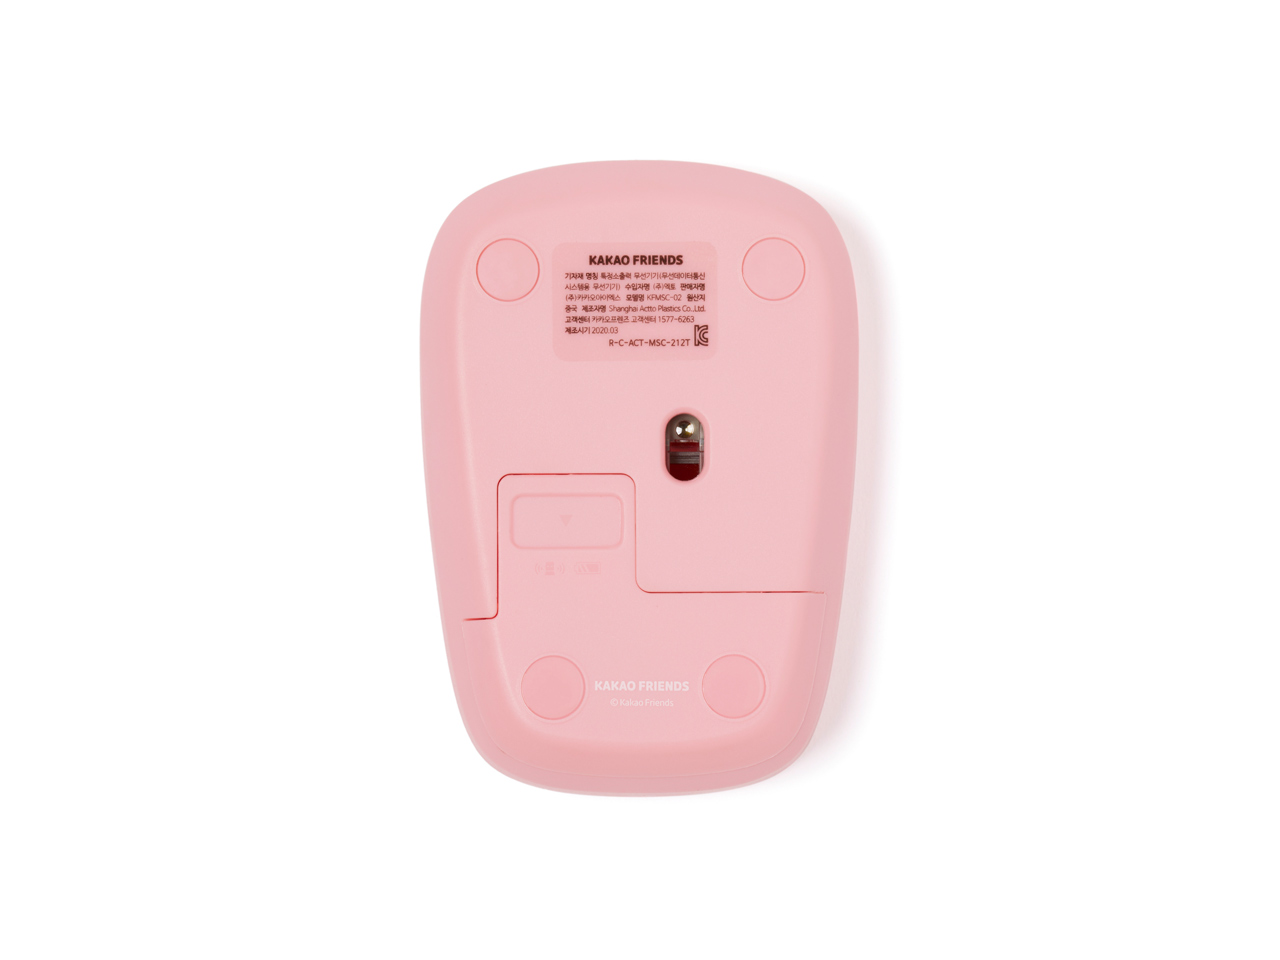 Kakao Friends Compact Wireless Mouse Apeach